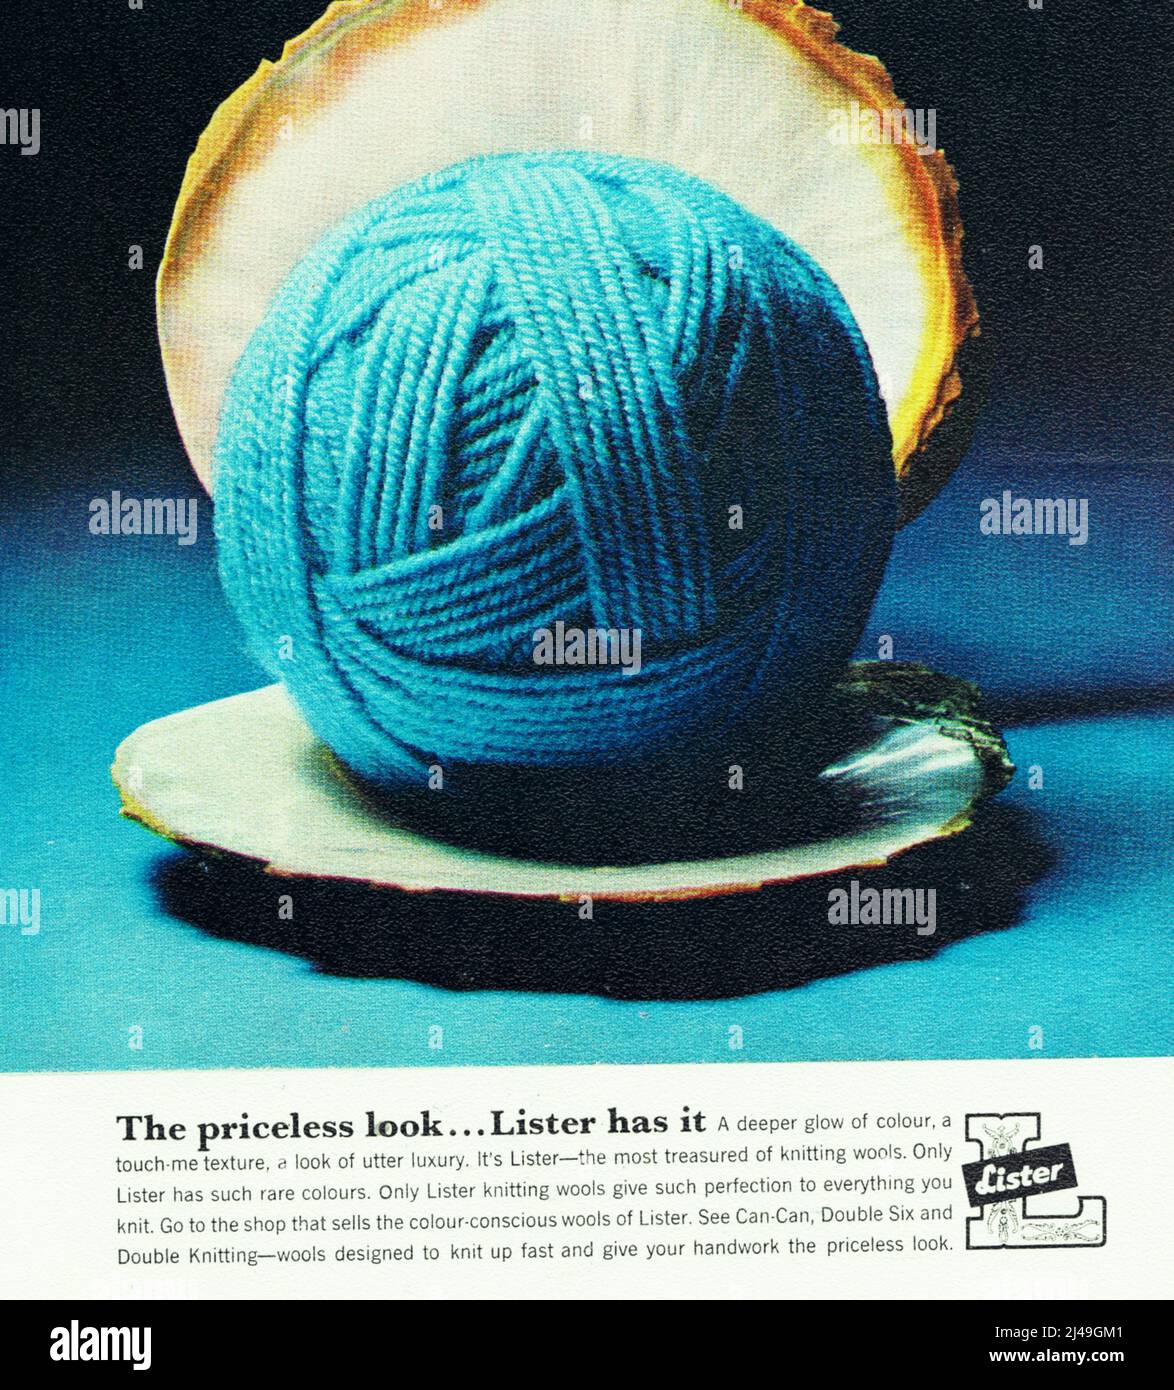 Lister knitting wools advertisement advert 1960s Stock Photo